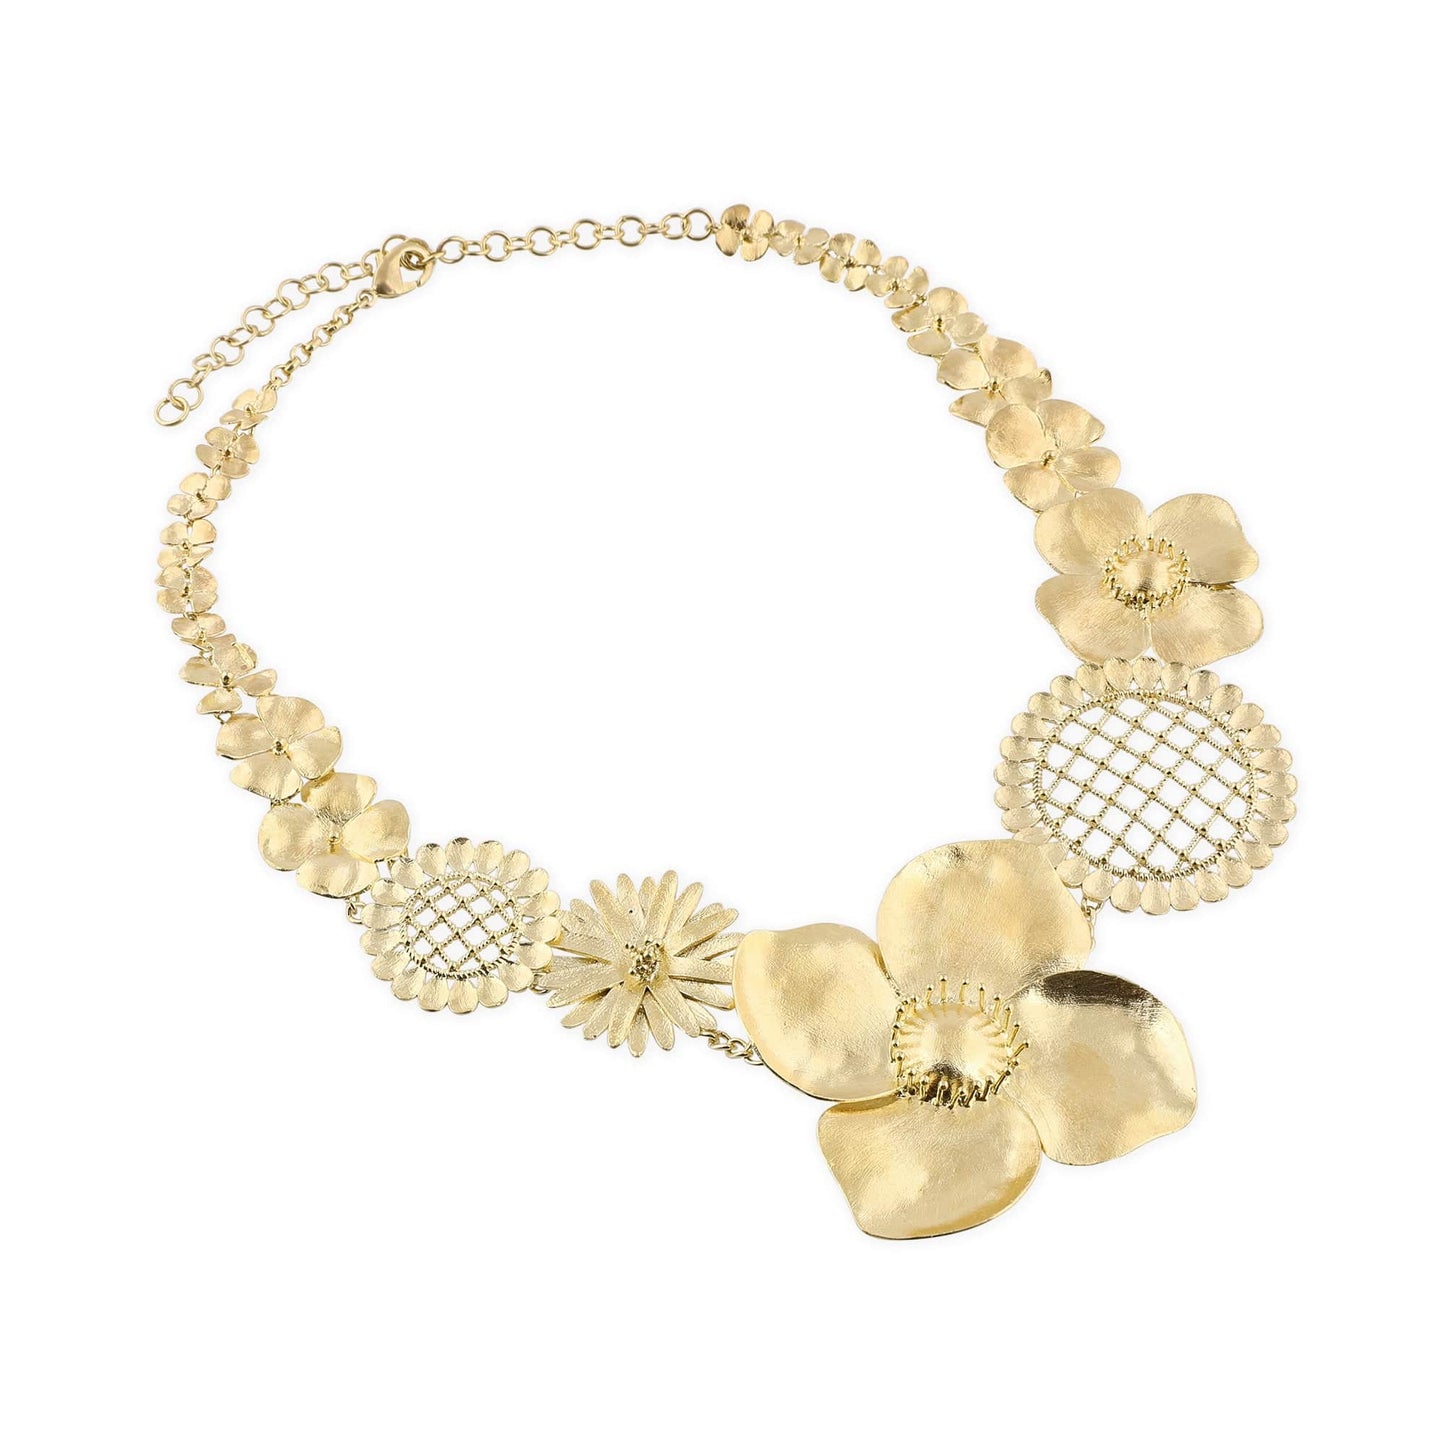 Christine Bekaert Jewelry Necklaces Bouquet Necklace